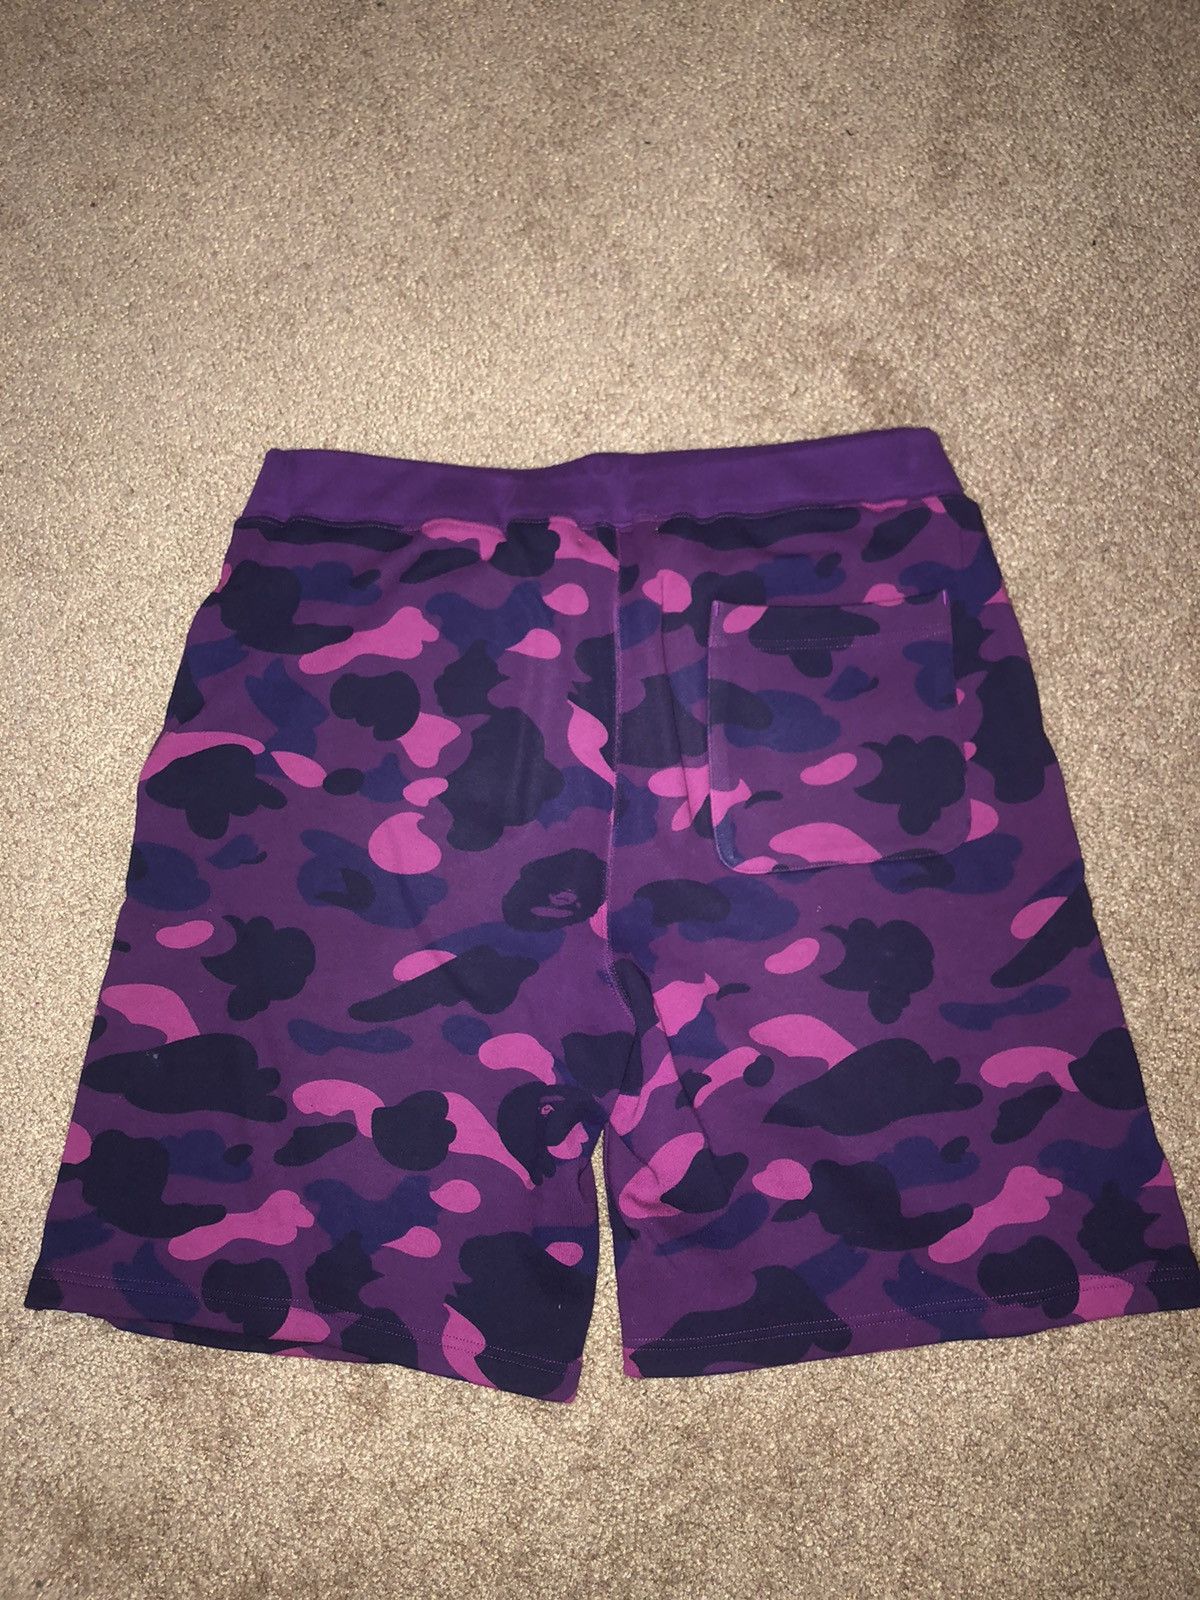 Bape Bape Purple Camo Shorts Size US 34 / EU 50 - 2 Preview